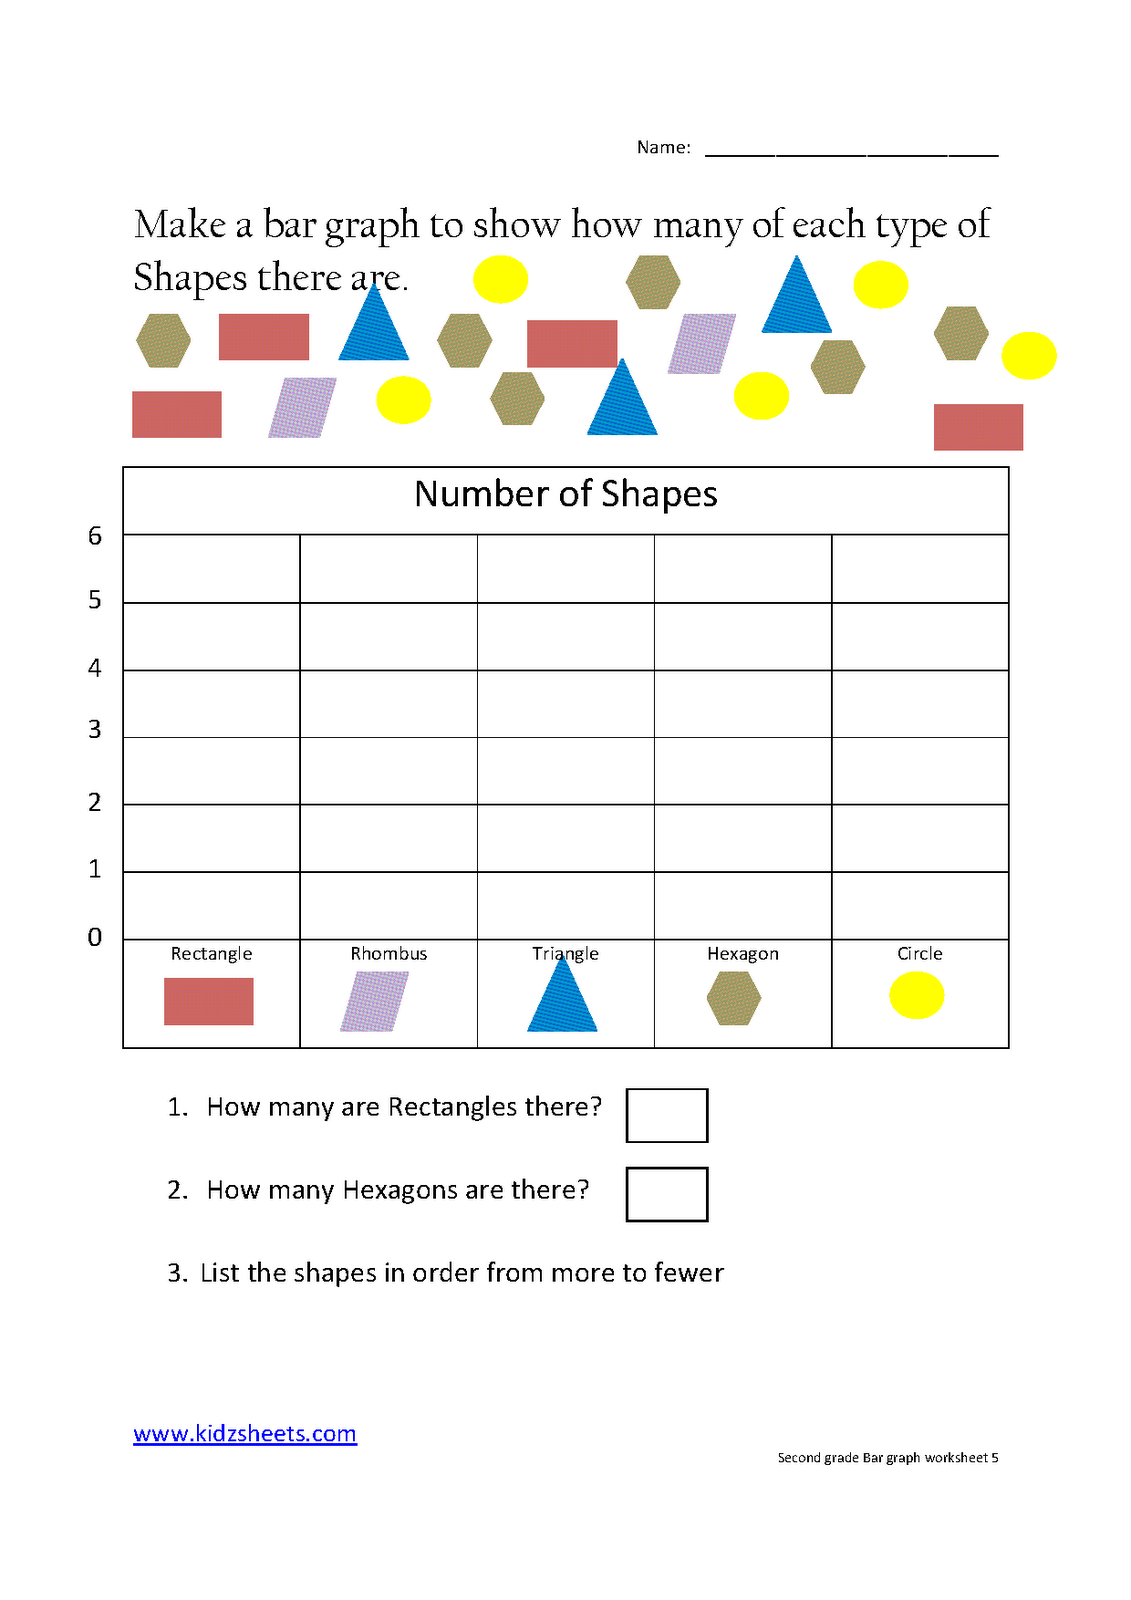 kidz-worksheets-second-grade-bar-graph-worksheet5